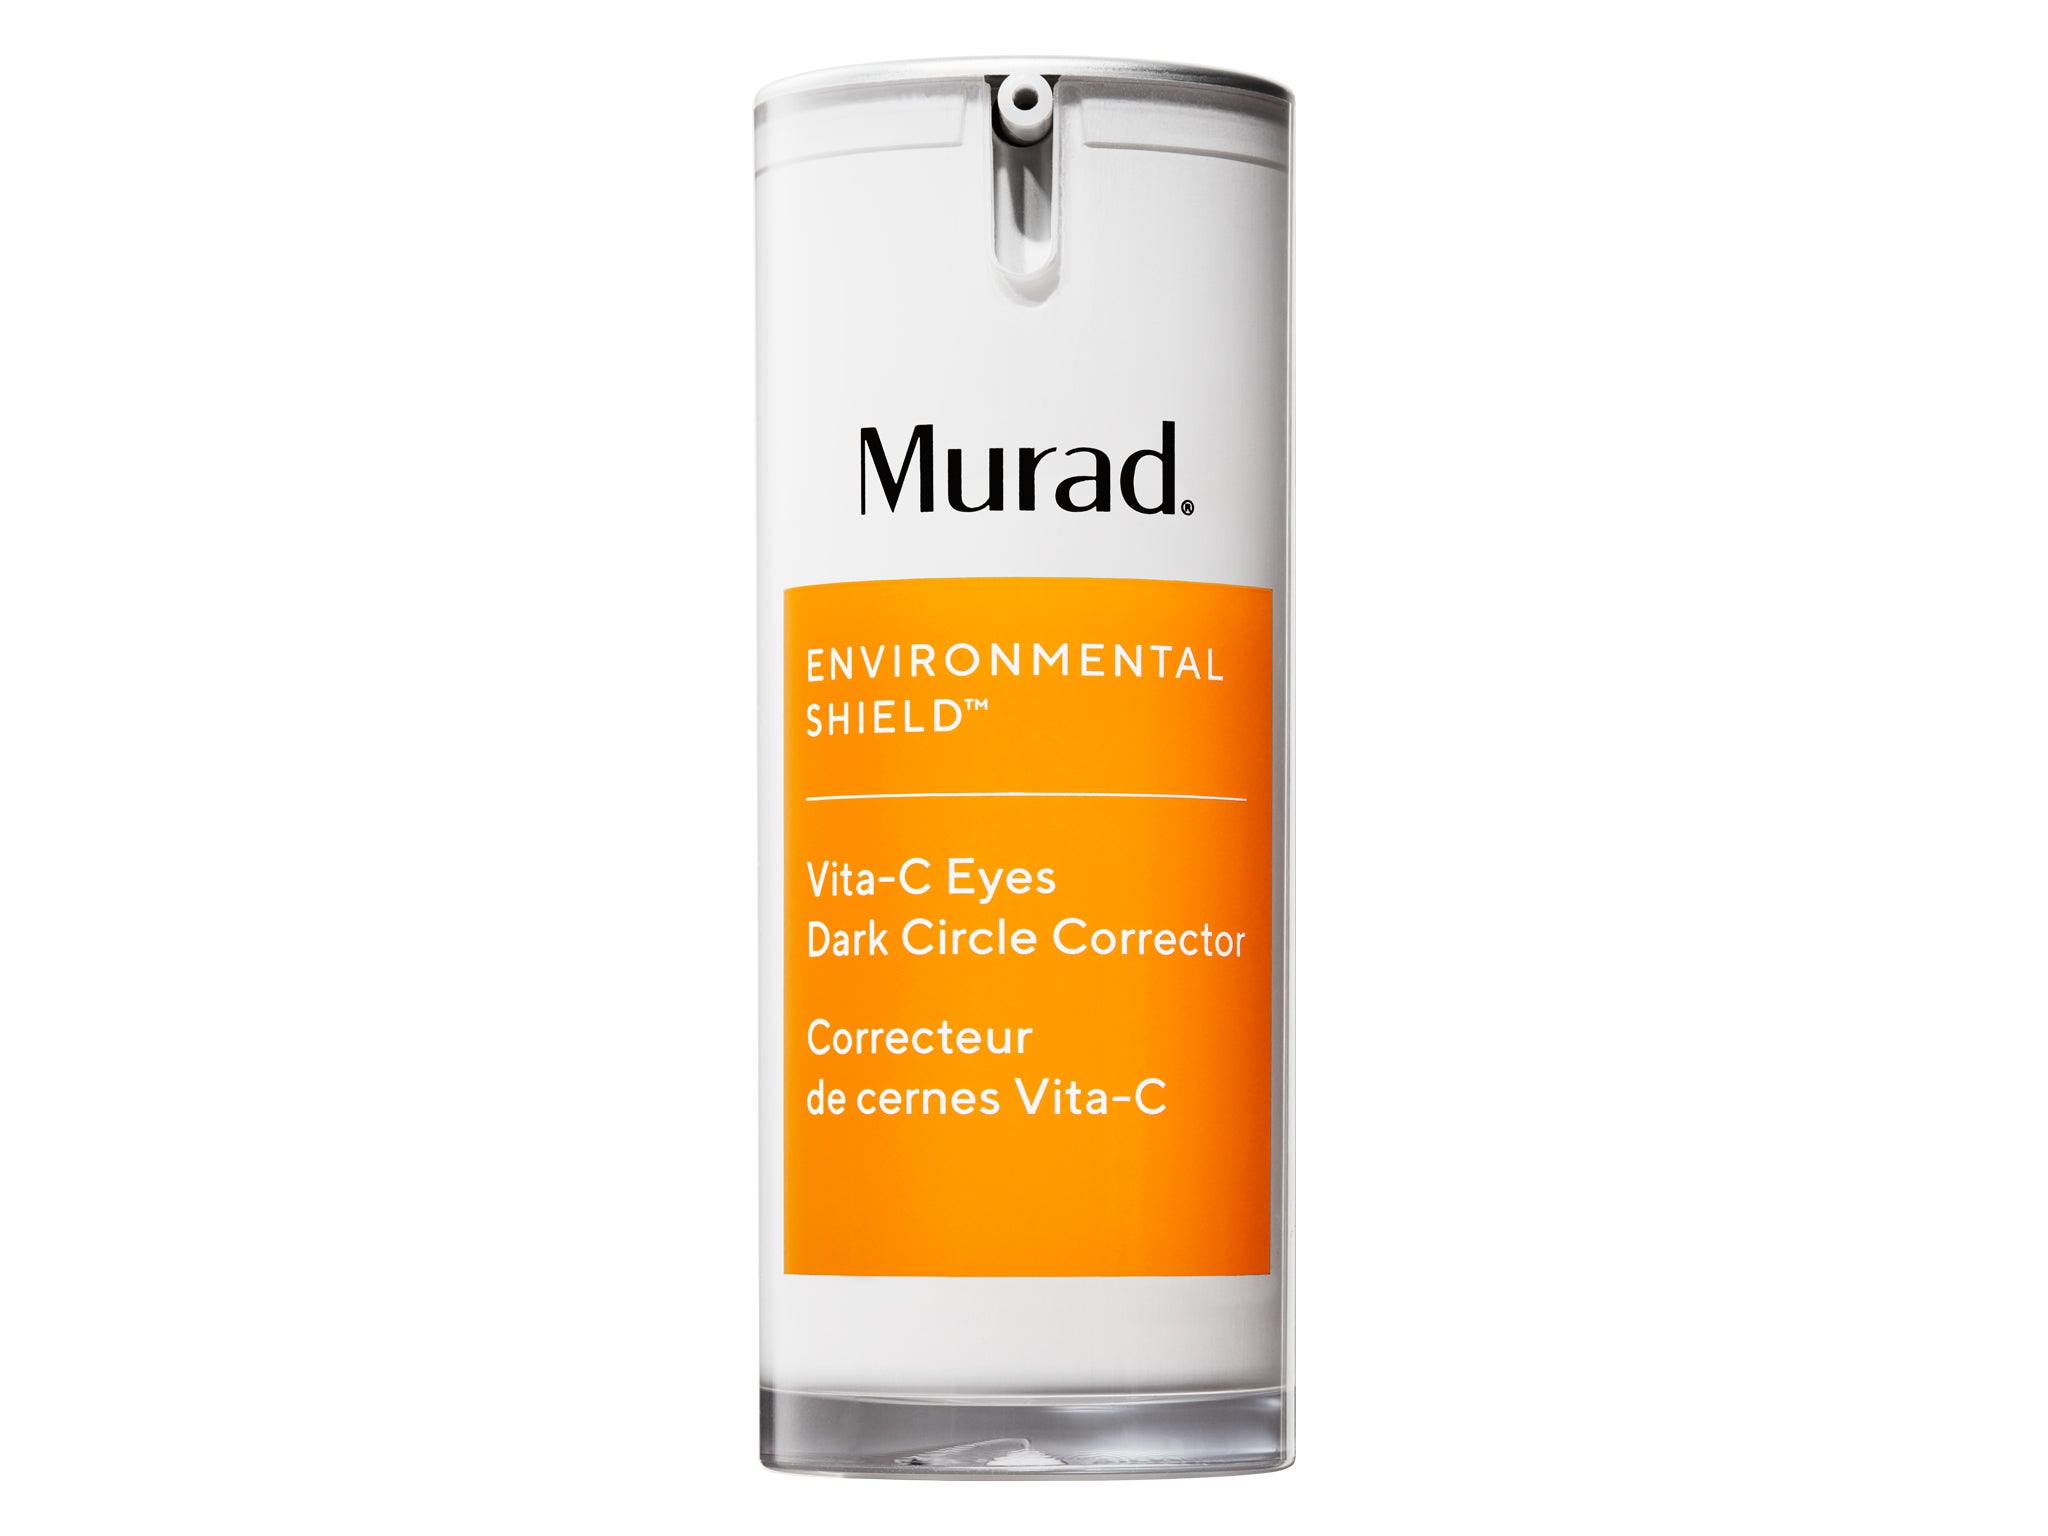 Murad Environmental Shield Vita-C Eyes Dark Circle Corrector.jpg